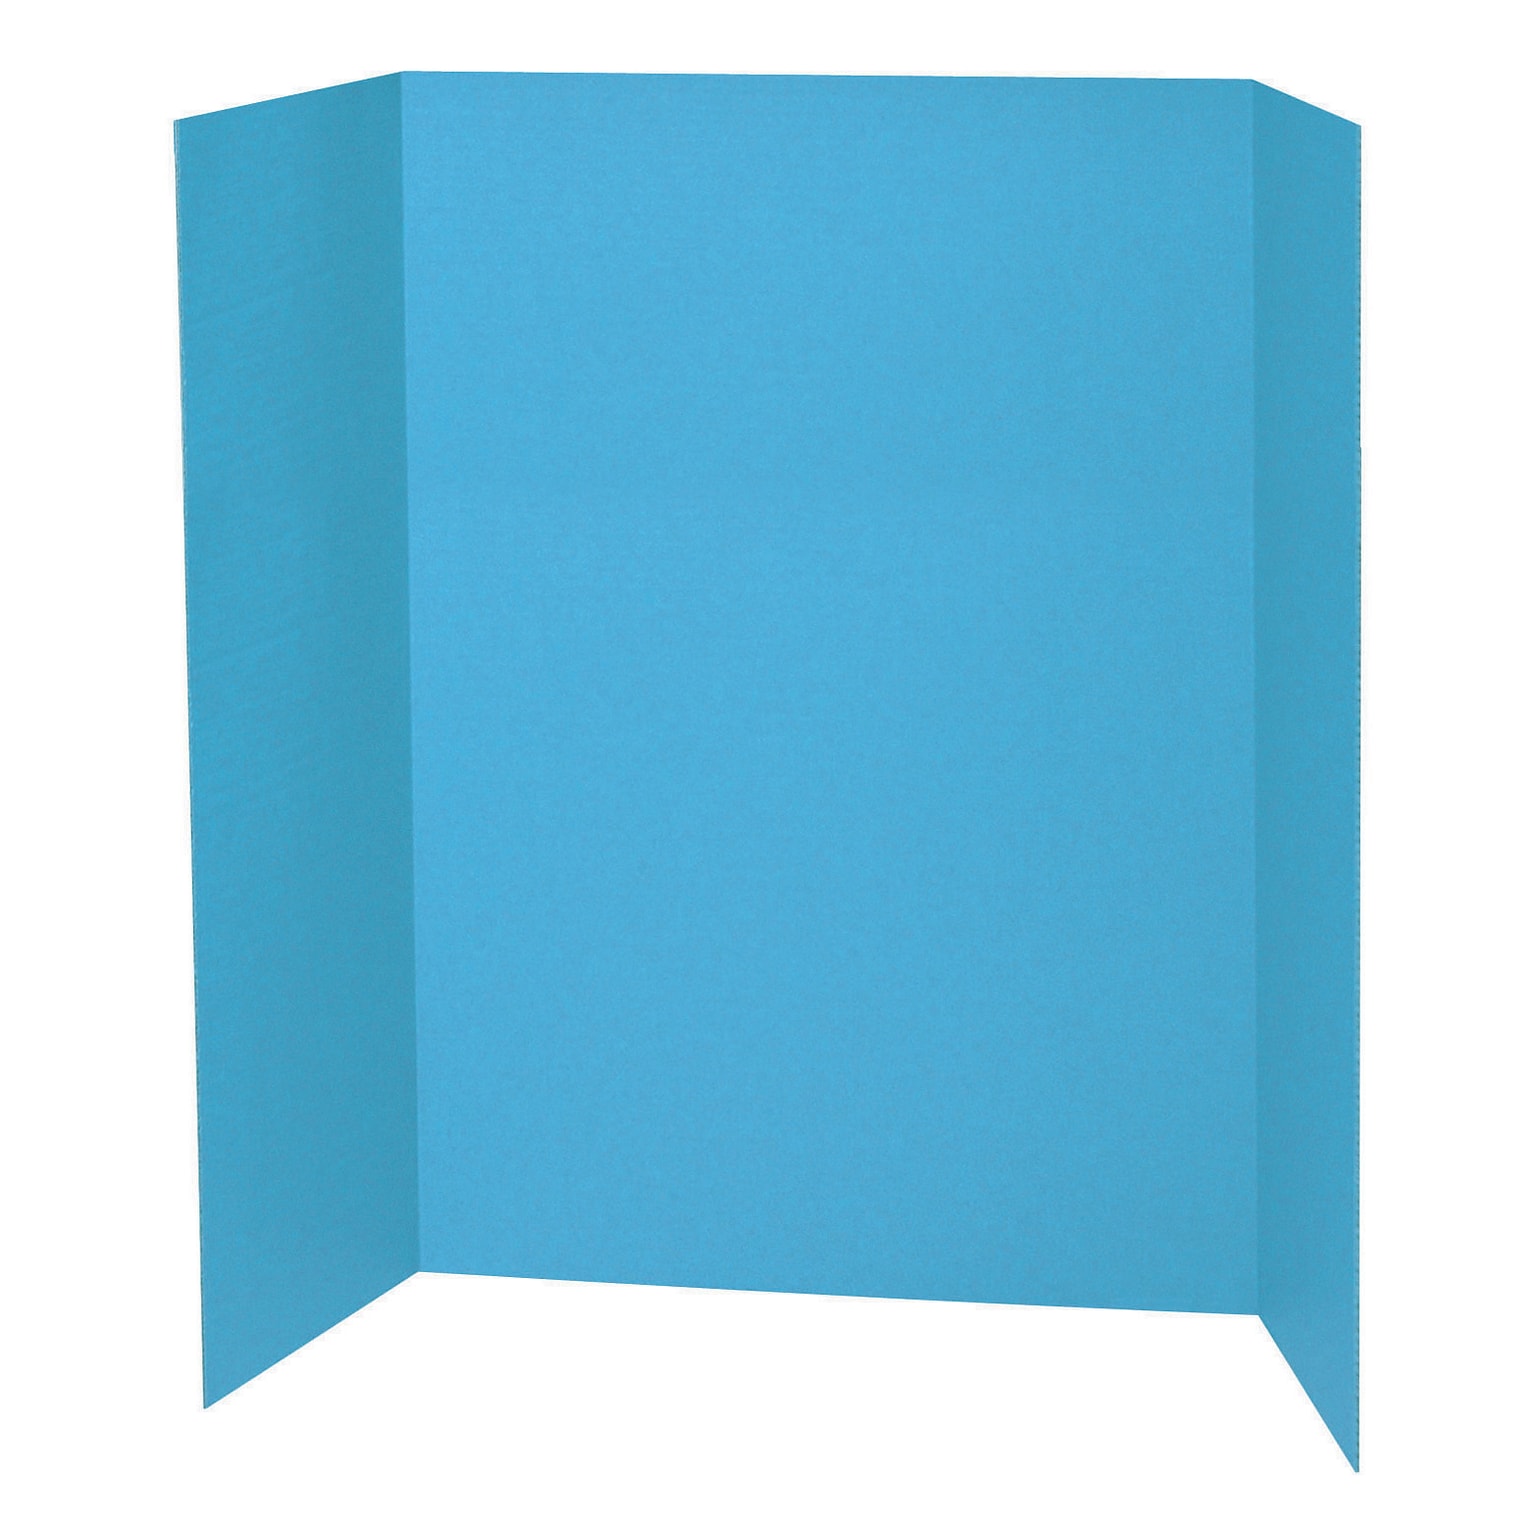 Pacon Presentation Board, 48 x 36, Sky Blue, 8 Boards/Bundle (PAC3771)